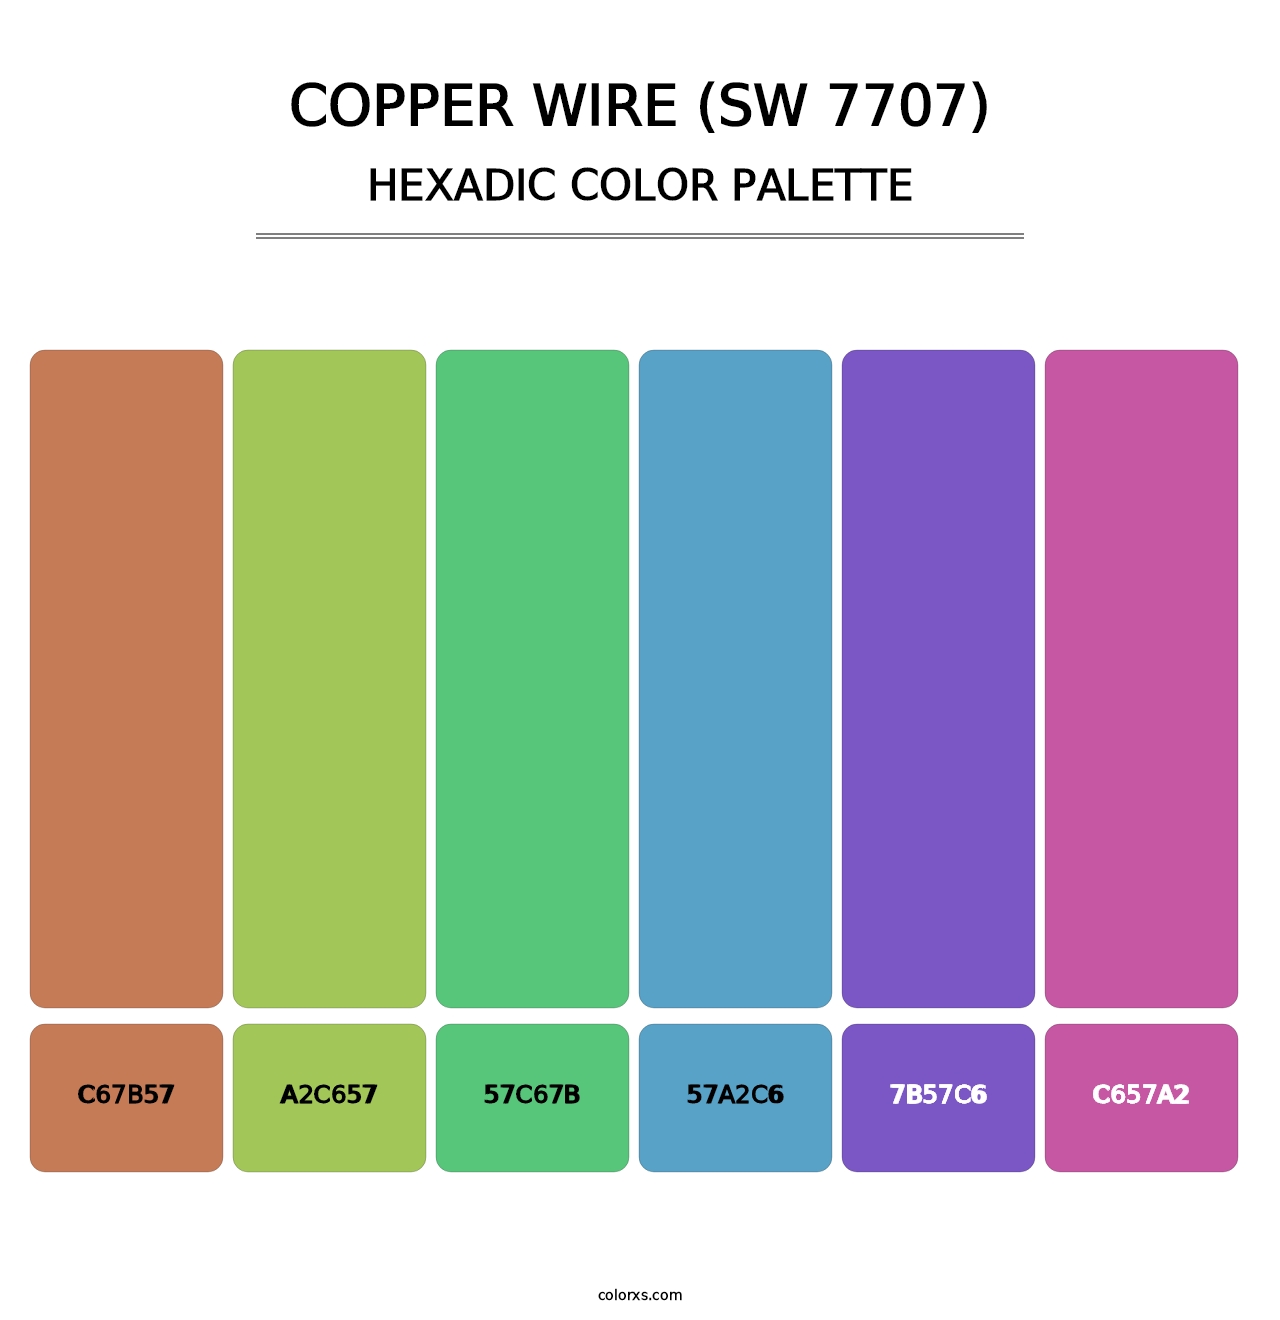 Copper Wire (SW 7707) - Hexadic Color Palette